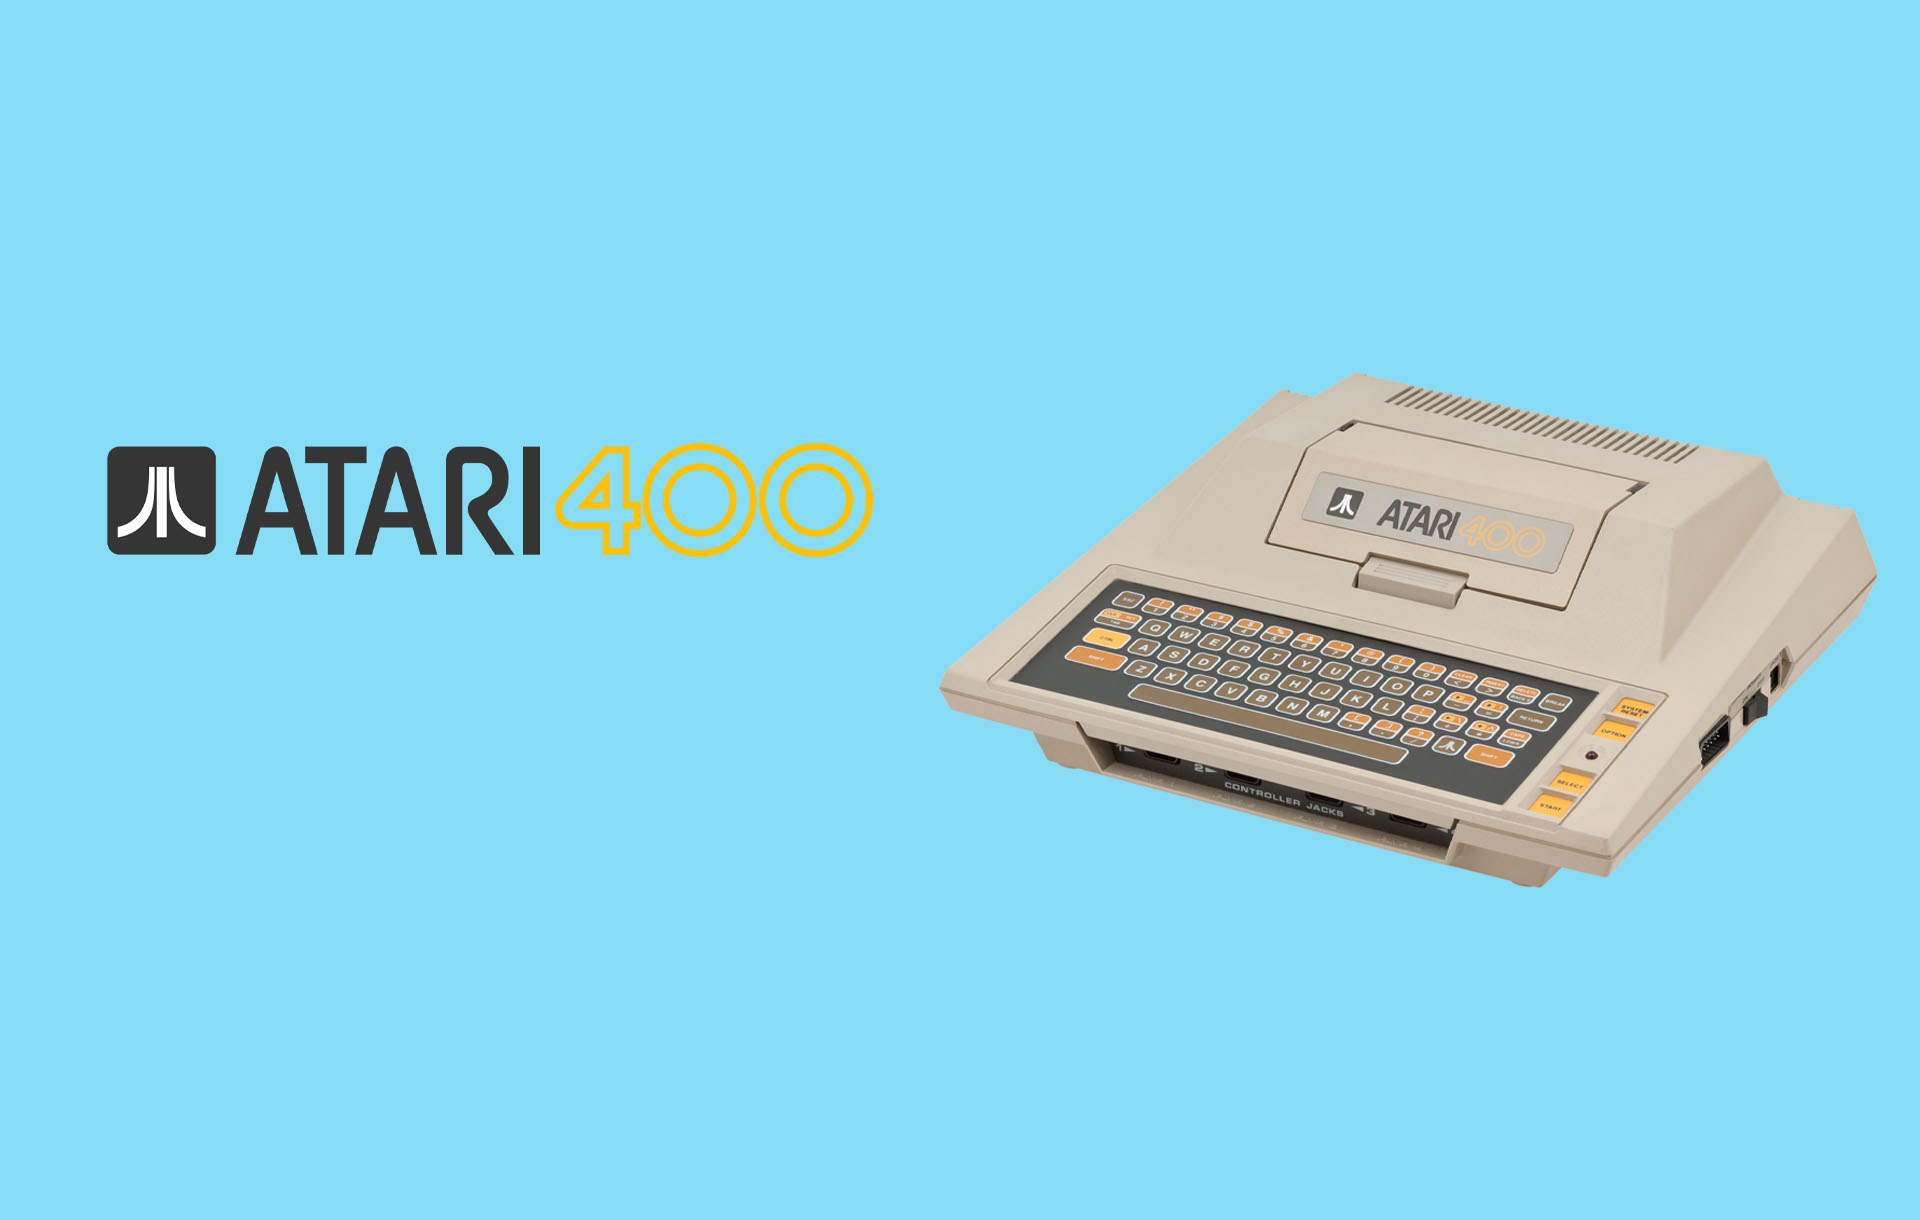 Atari 400 Marquee